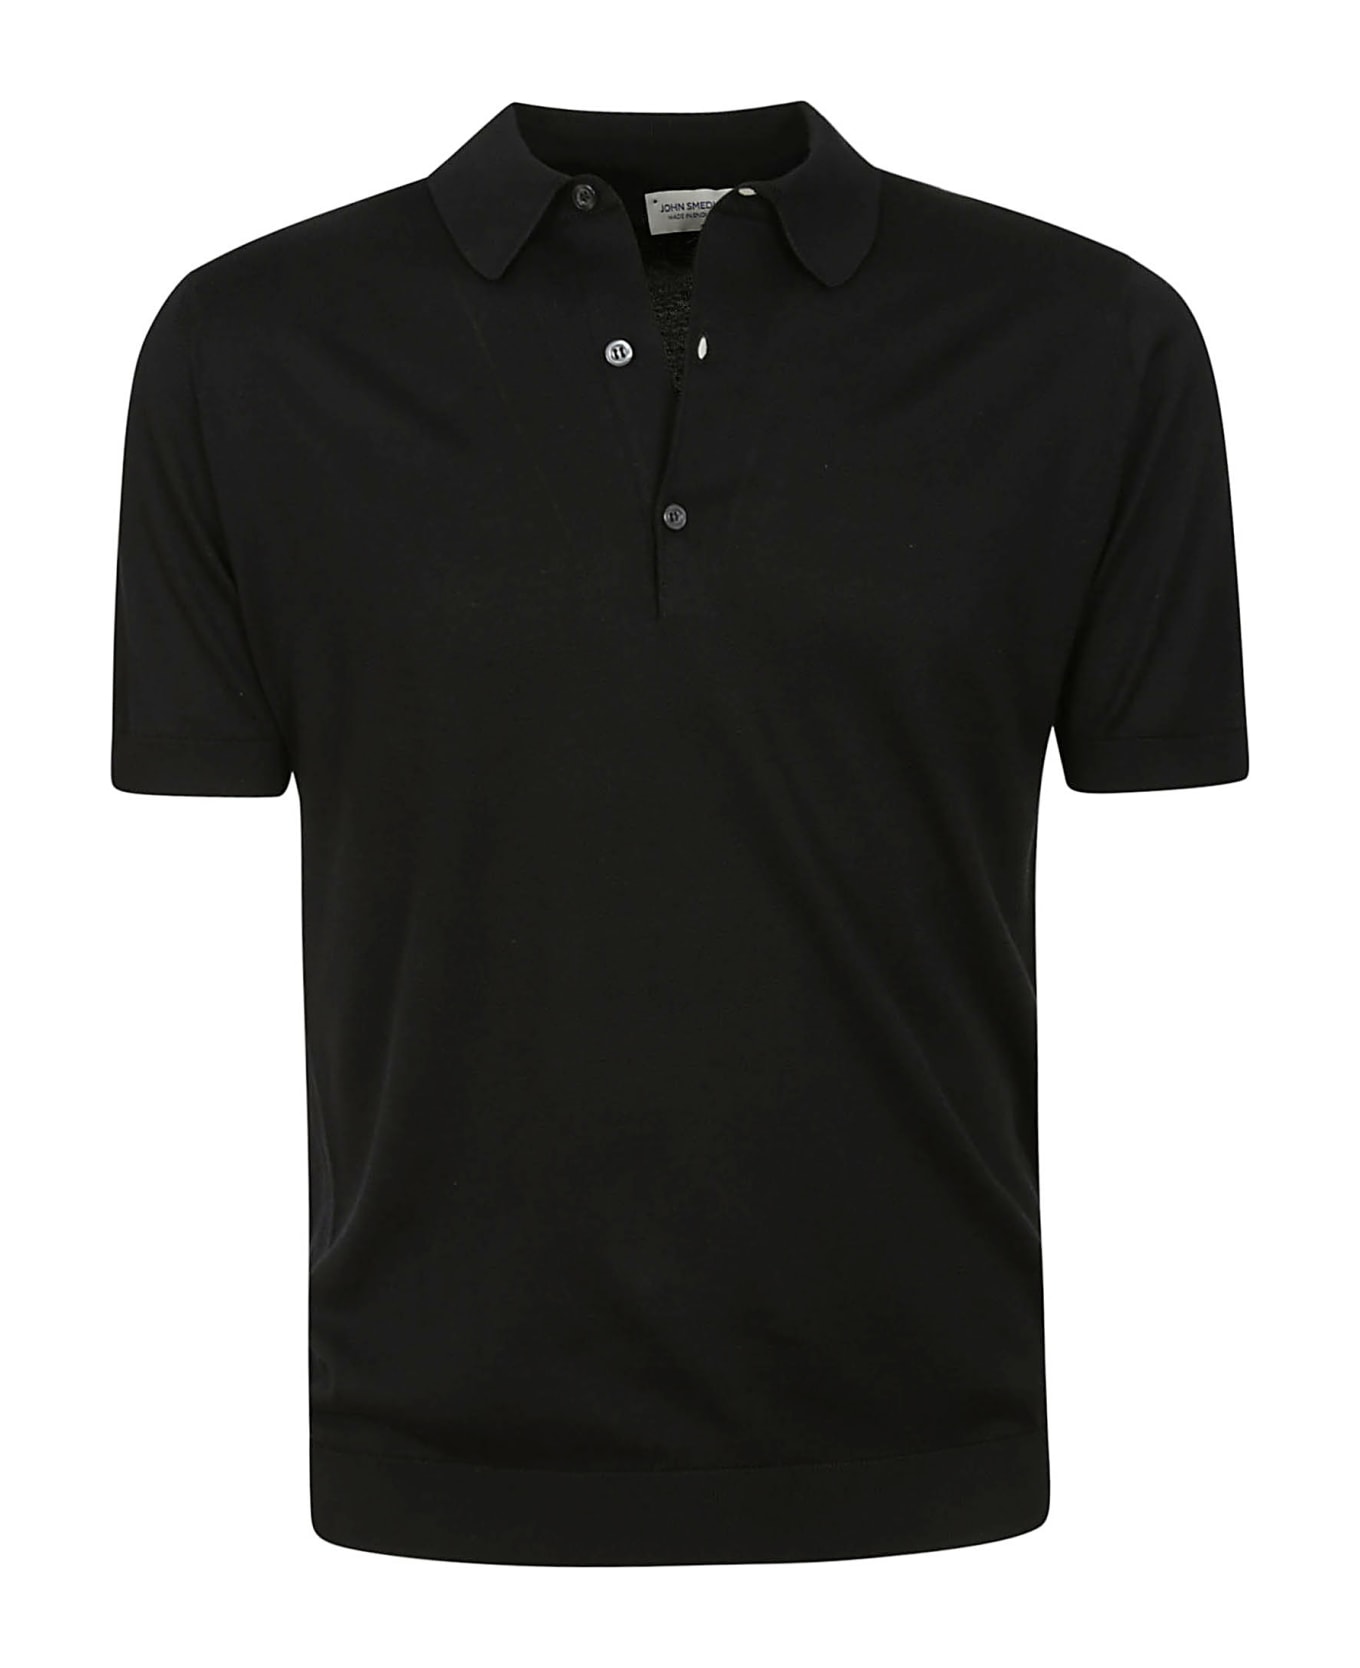 John Smedley Adrian Shirt Ss - Black ポロシャツ